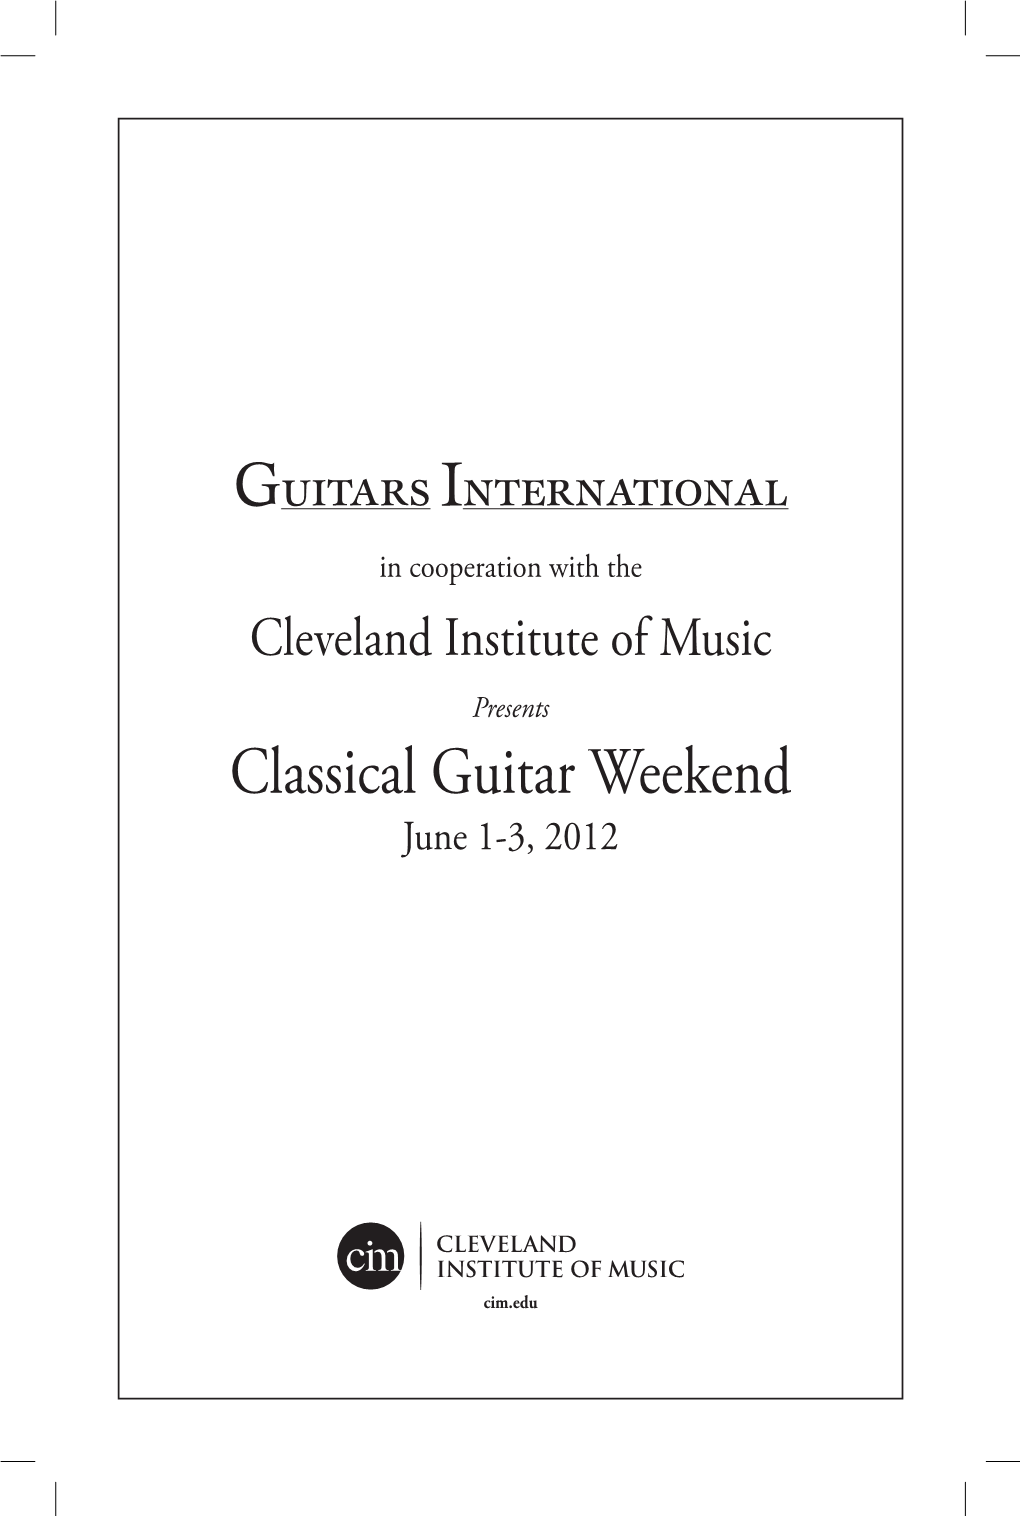 Classical Guitar Weekend June 1-3, 2012